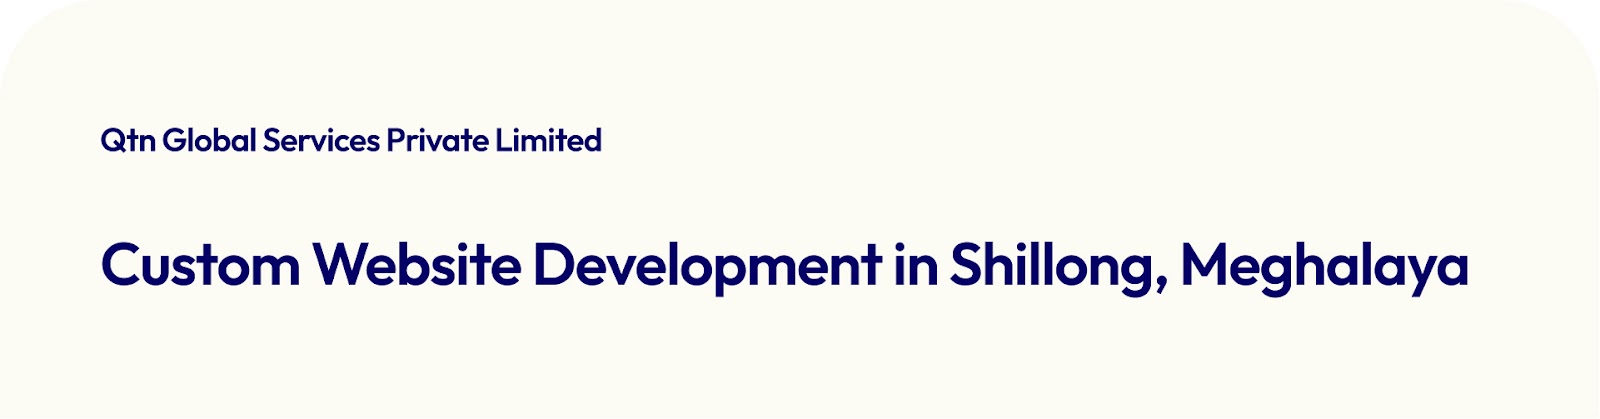 Custom Website Development in Shillong, Meghalaya 